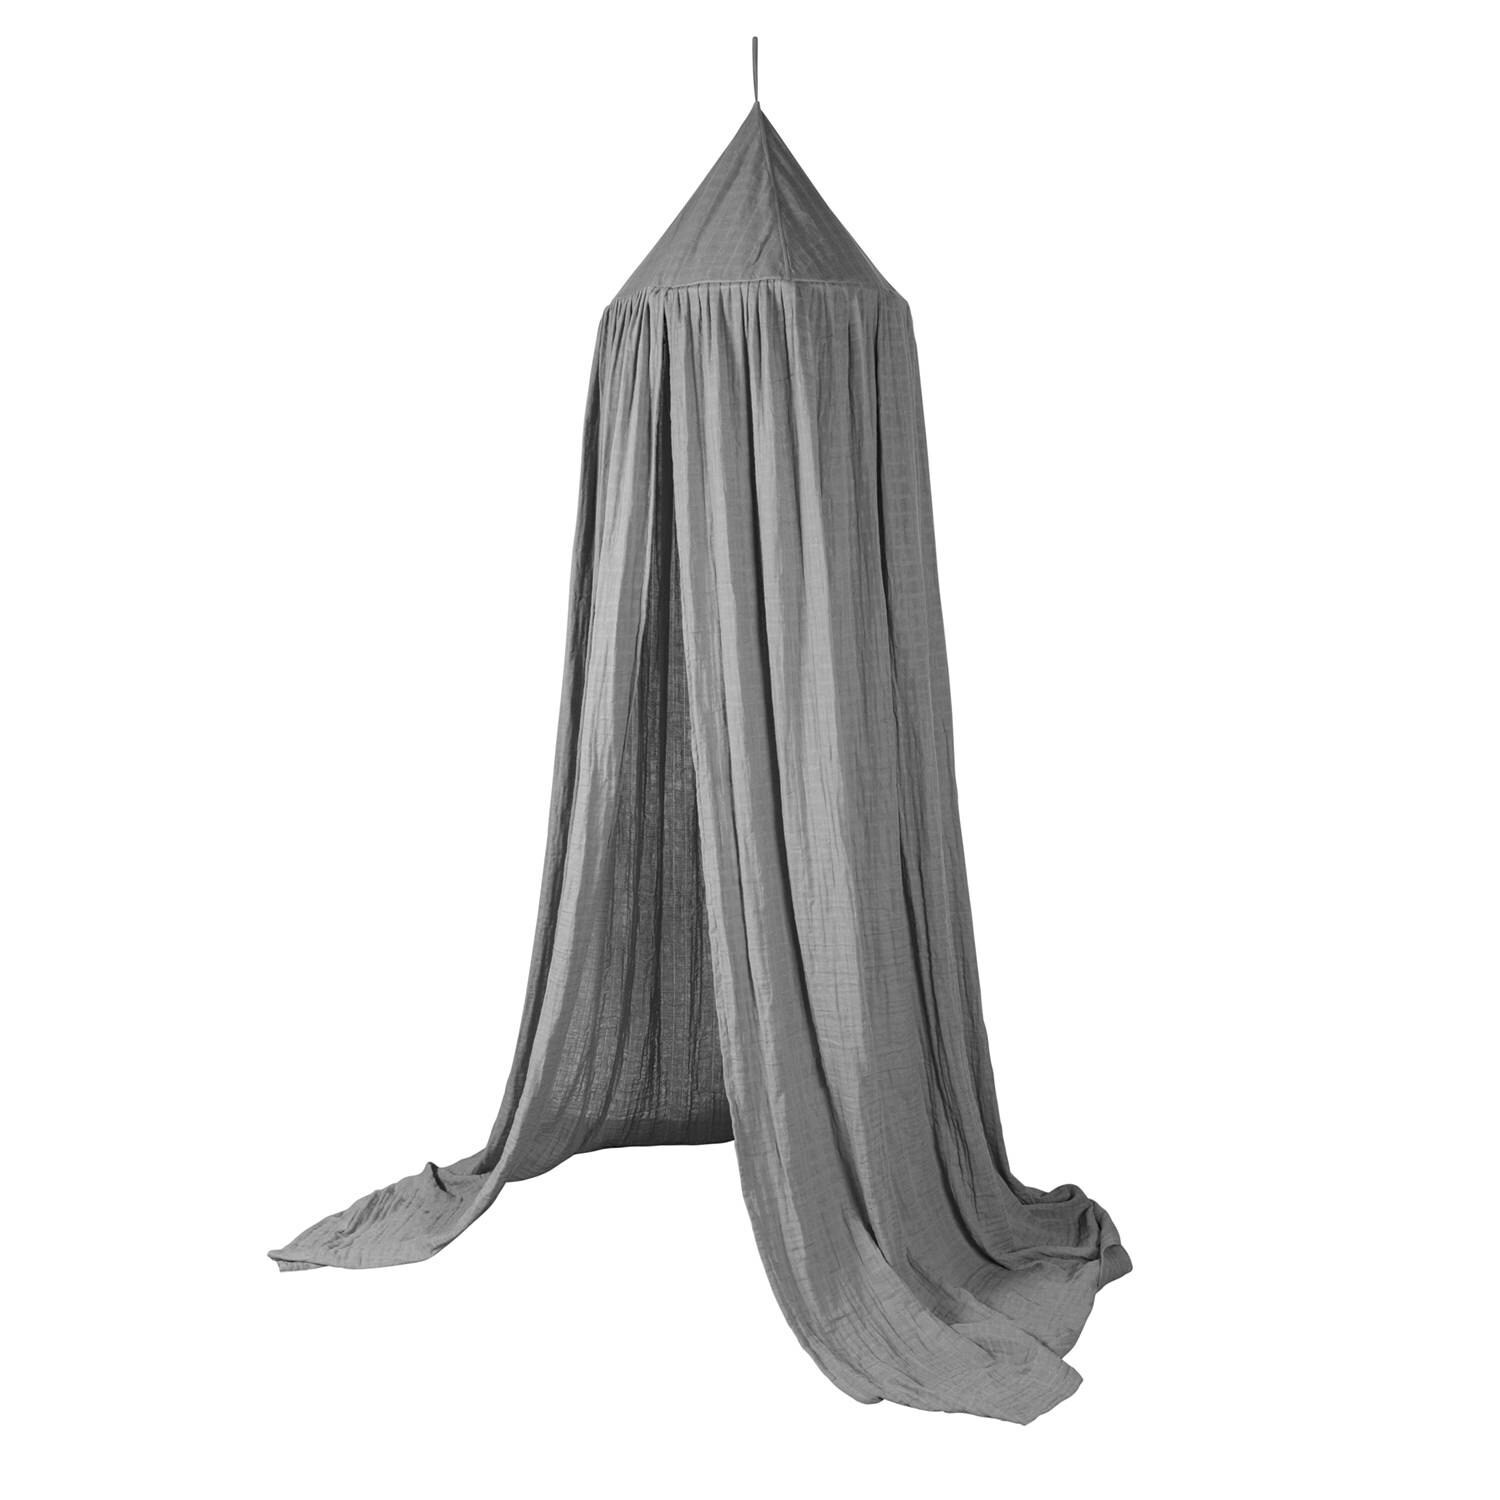 Duet Shower Curtain Light Grey, 150x200 cm - Mette Ditmer @ RoyalDesign